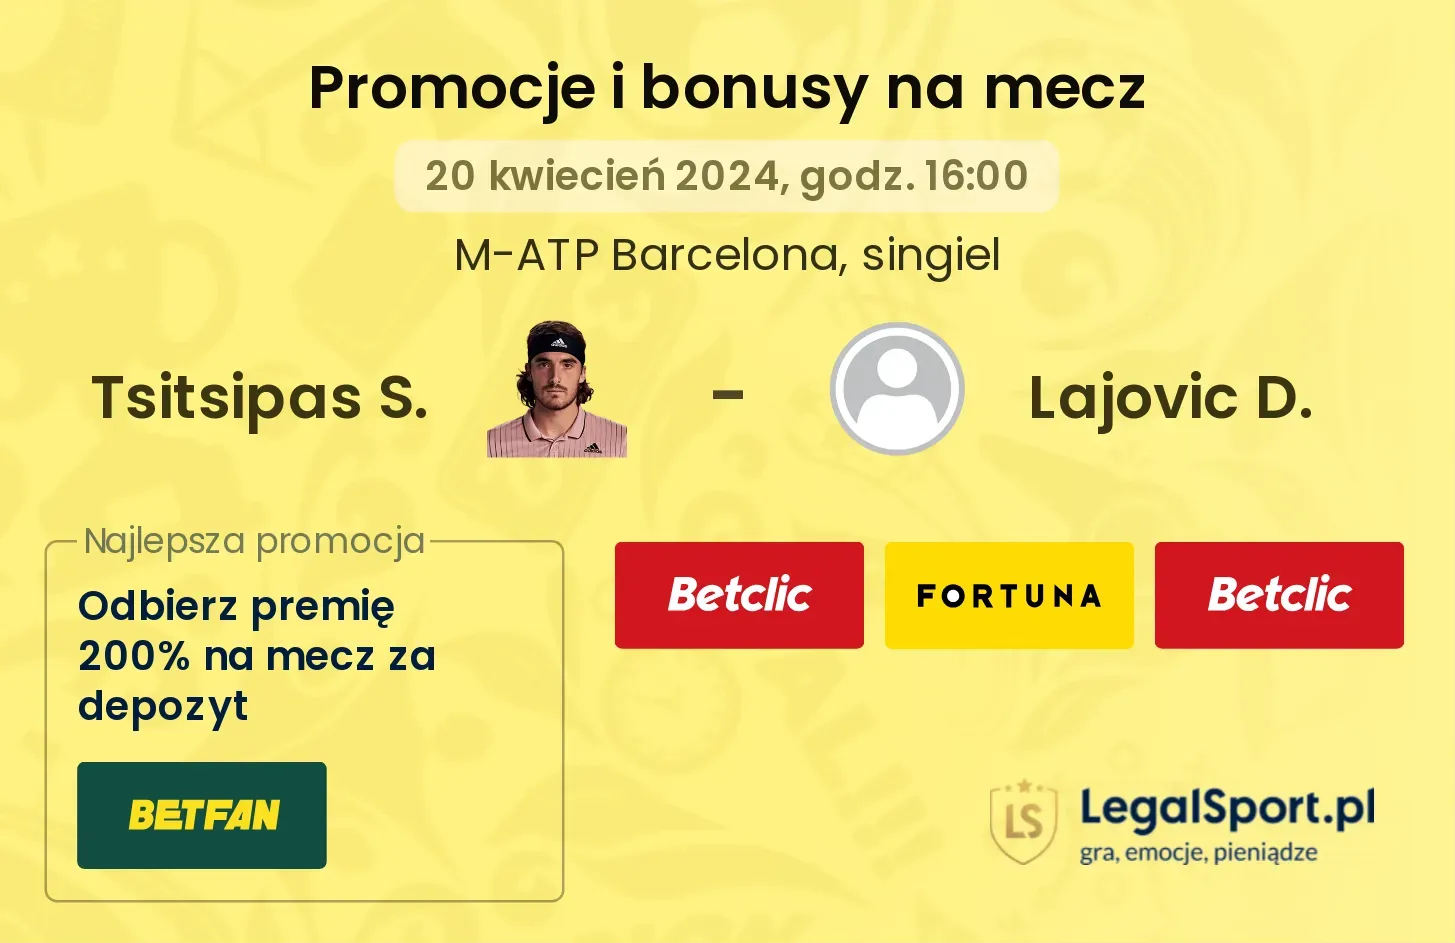 Tsitsipas S. - Lajovic D. promocje bonusy na mecz